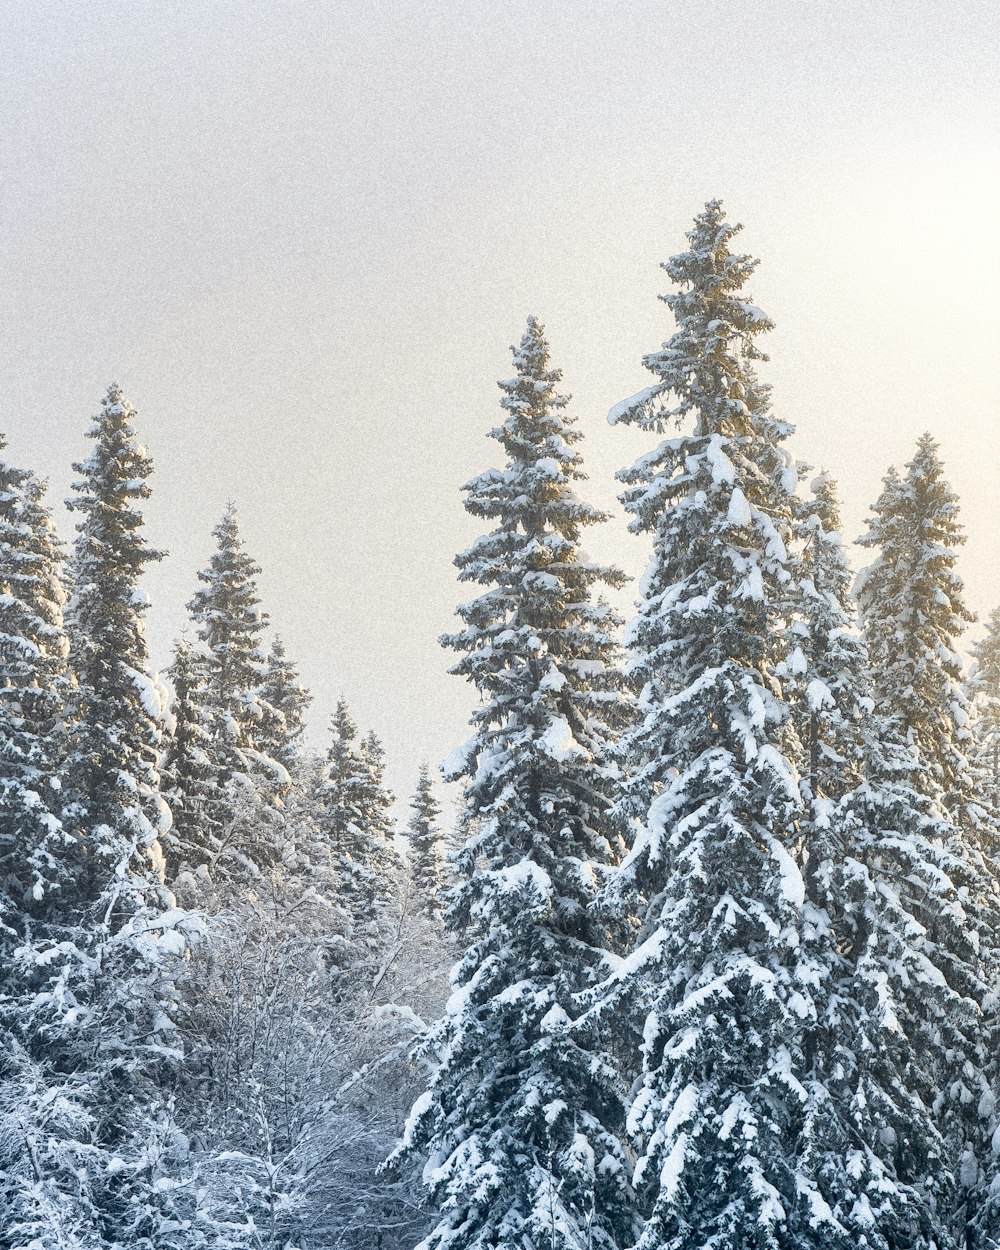 Un grupo de árboles cubiertos de nieve junto a un bosque